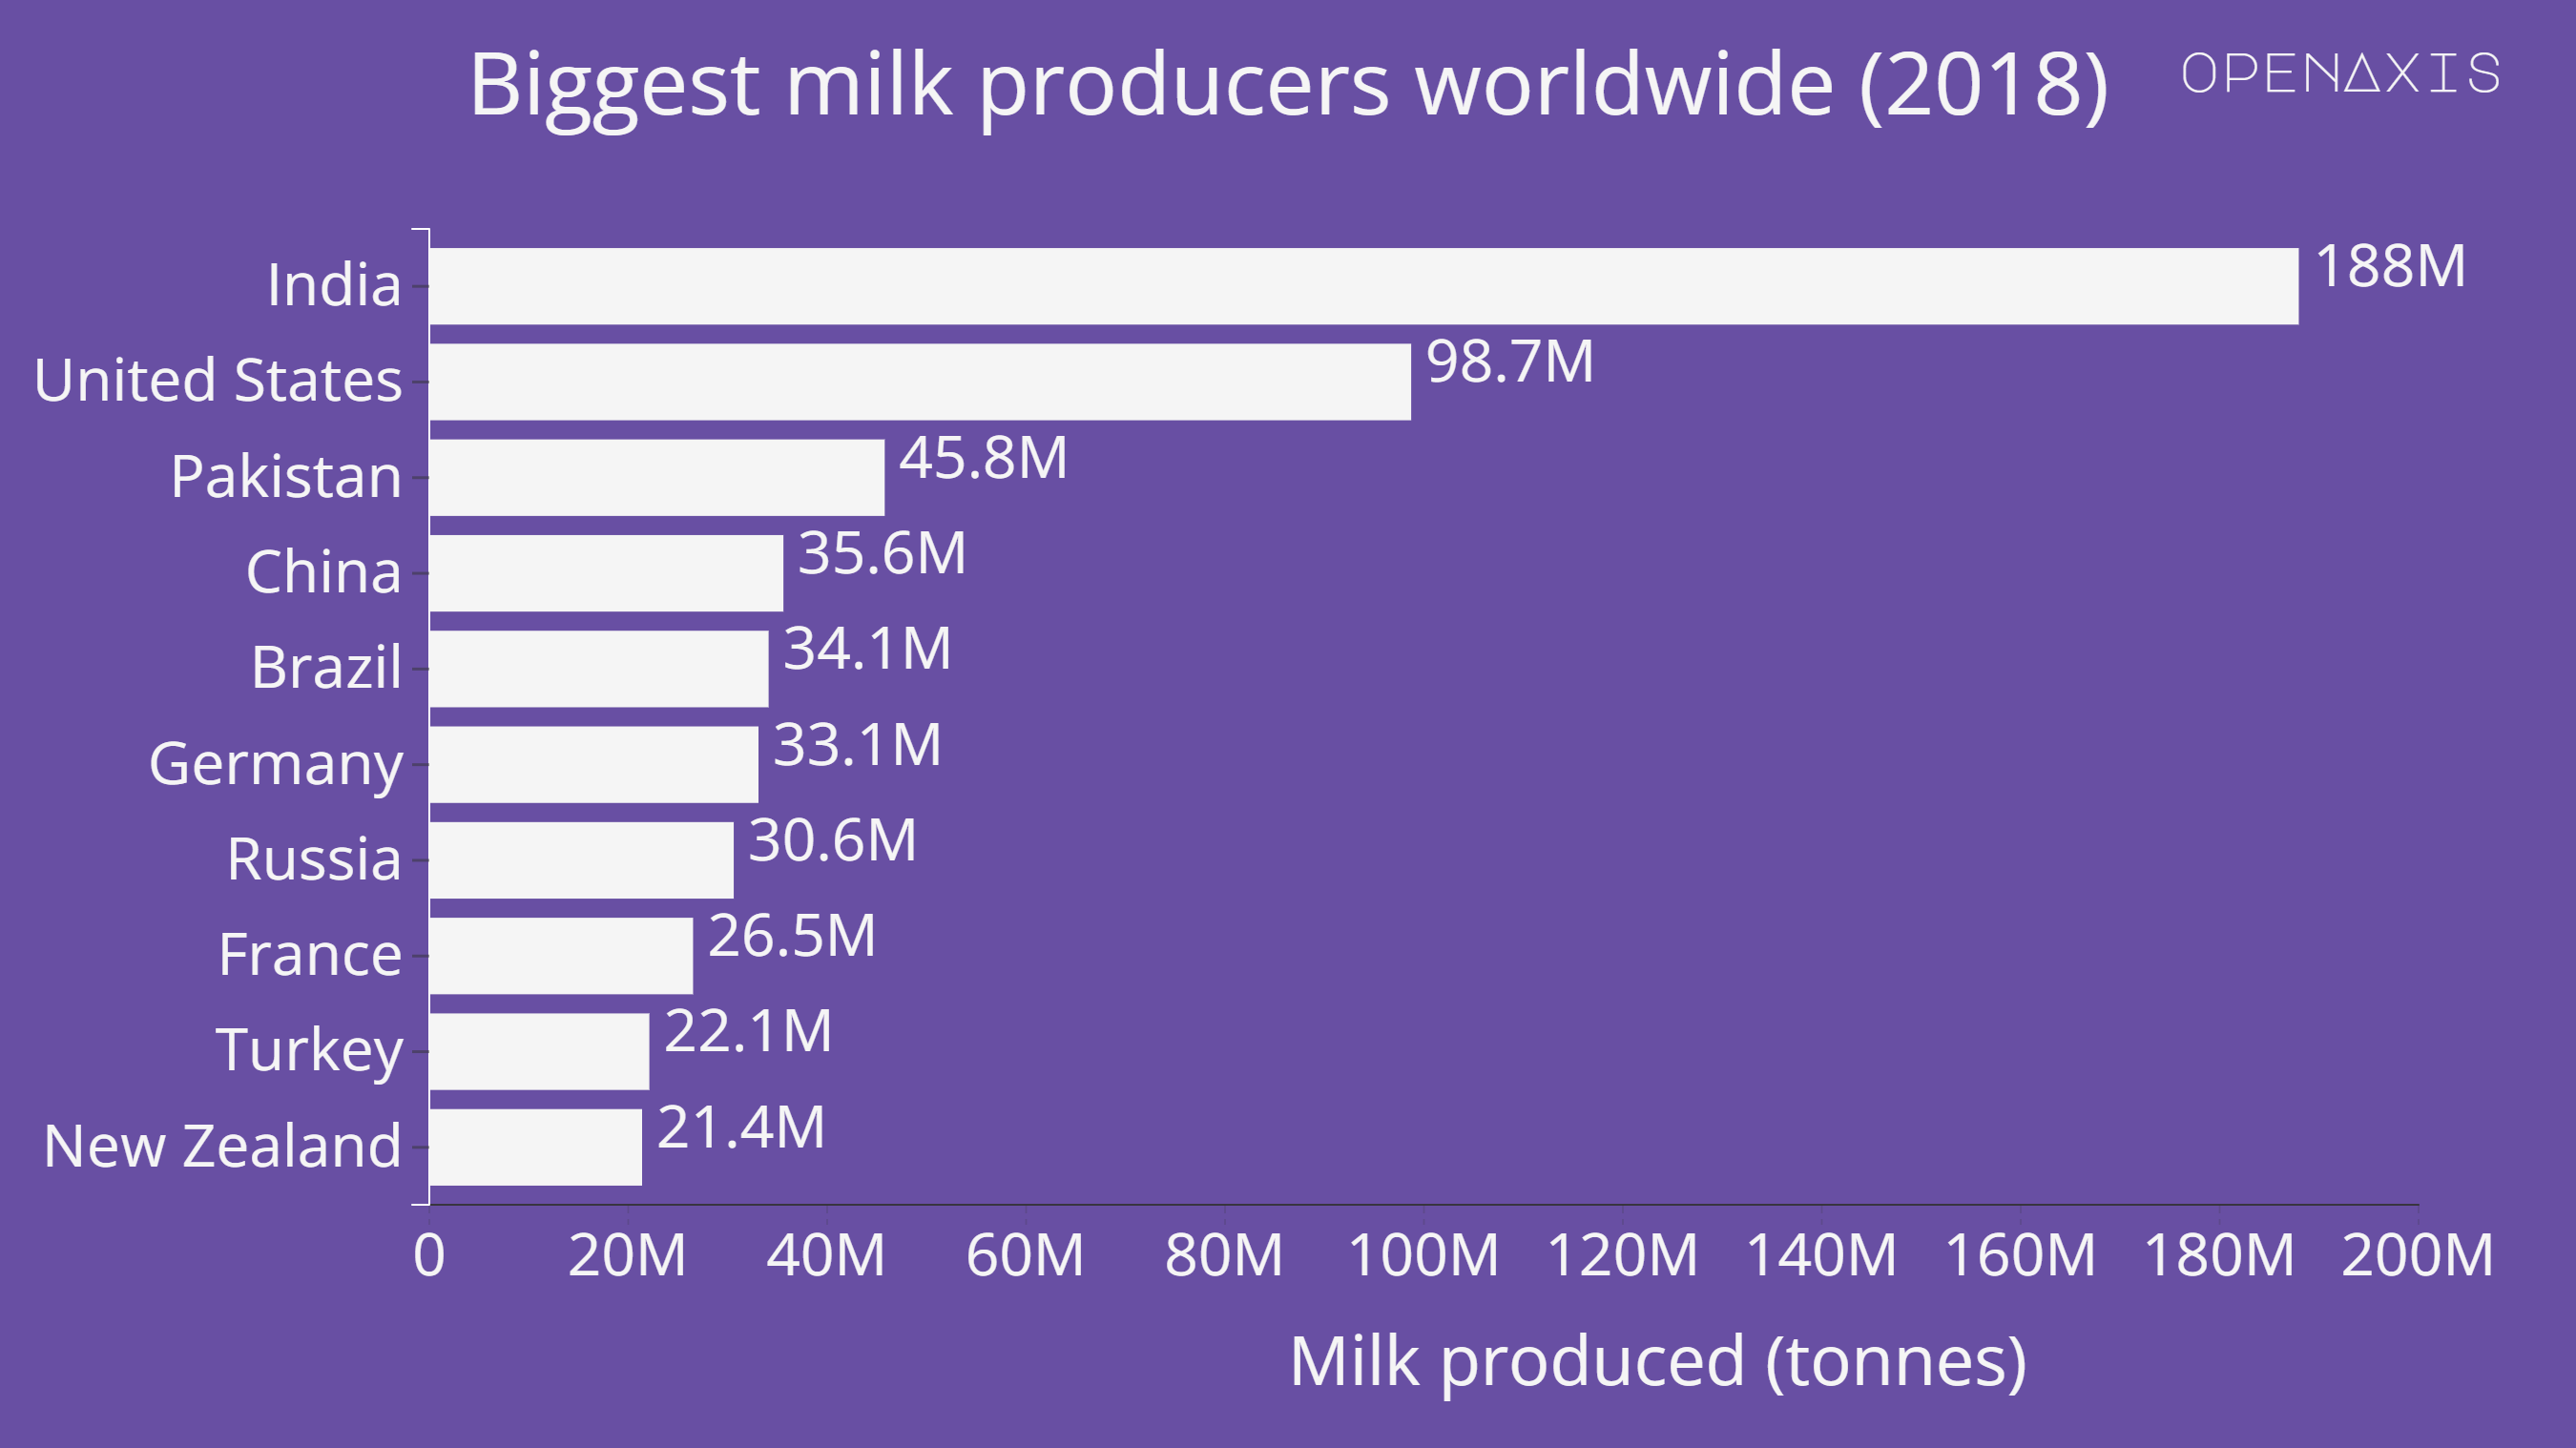 "Biggest milk producers worldwide (2018)"